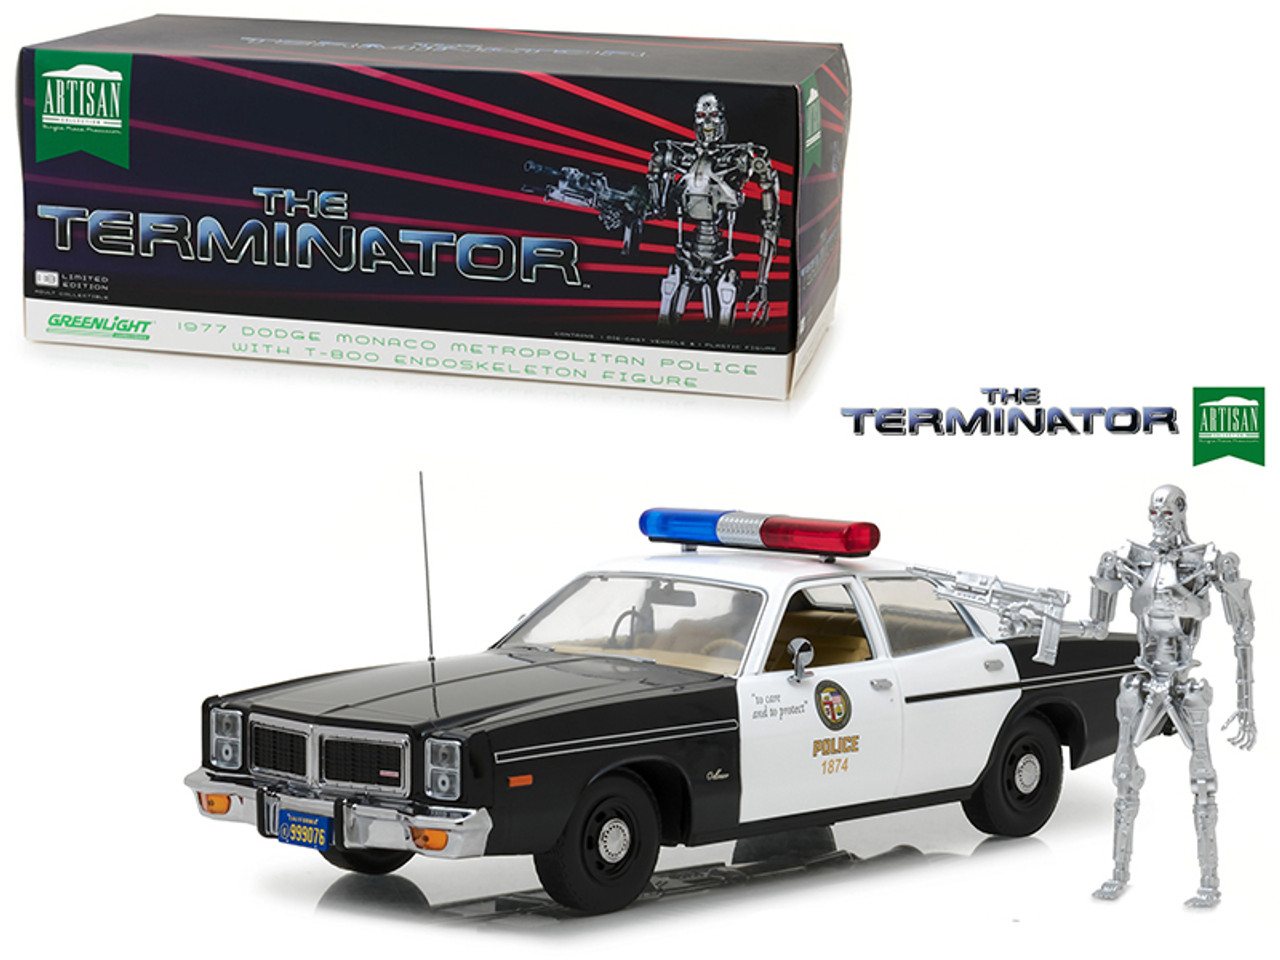 1/18 Greenlight 1977 Dodge Monaco Metropolitan Police with T-800 Endoskeleton Figure "The Terminator" (1984) Movie Diecast Car Model